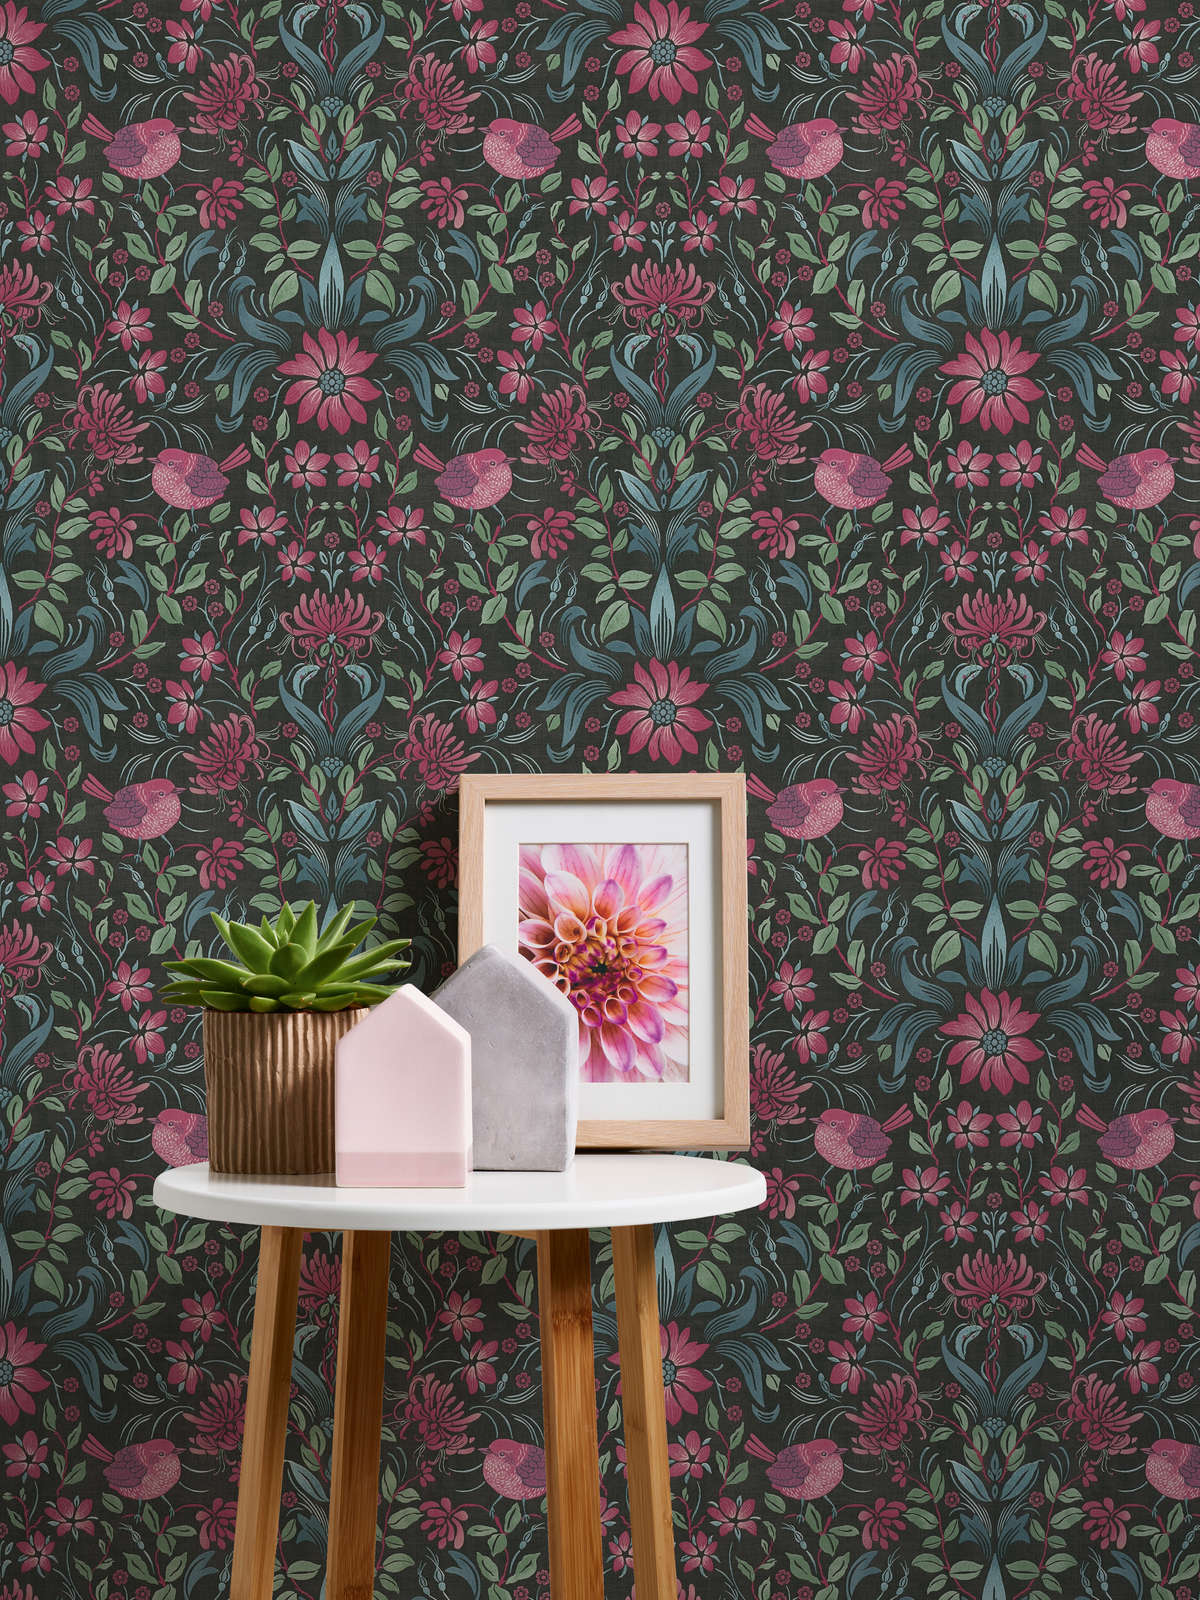             Playful floral wallpaper with birds - black, pink, blue
        